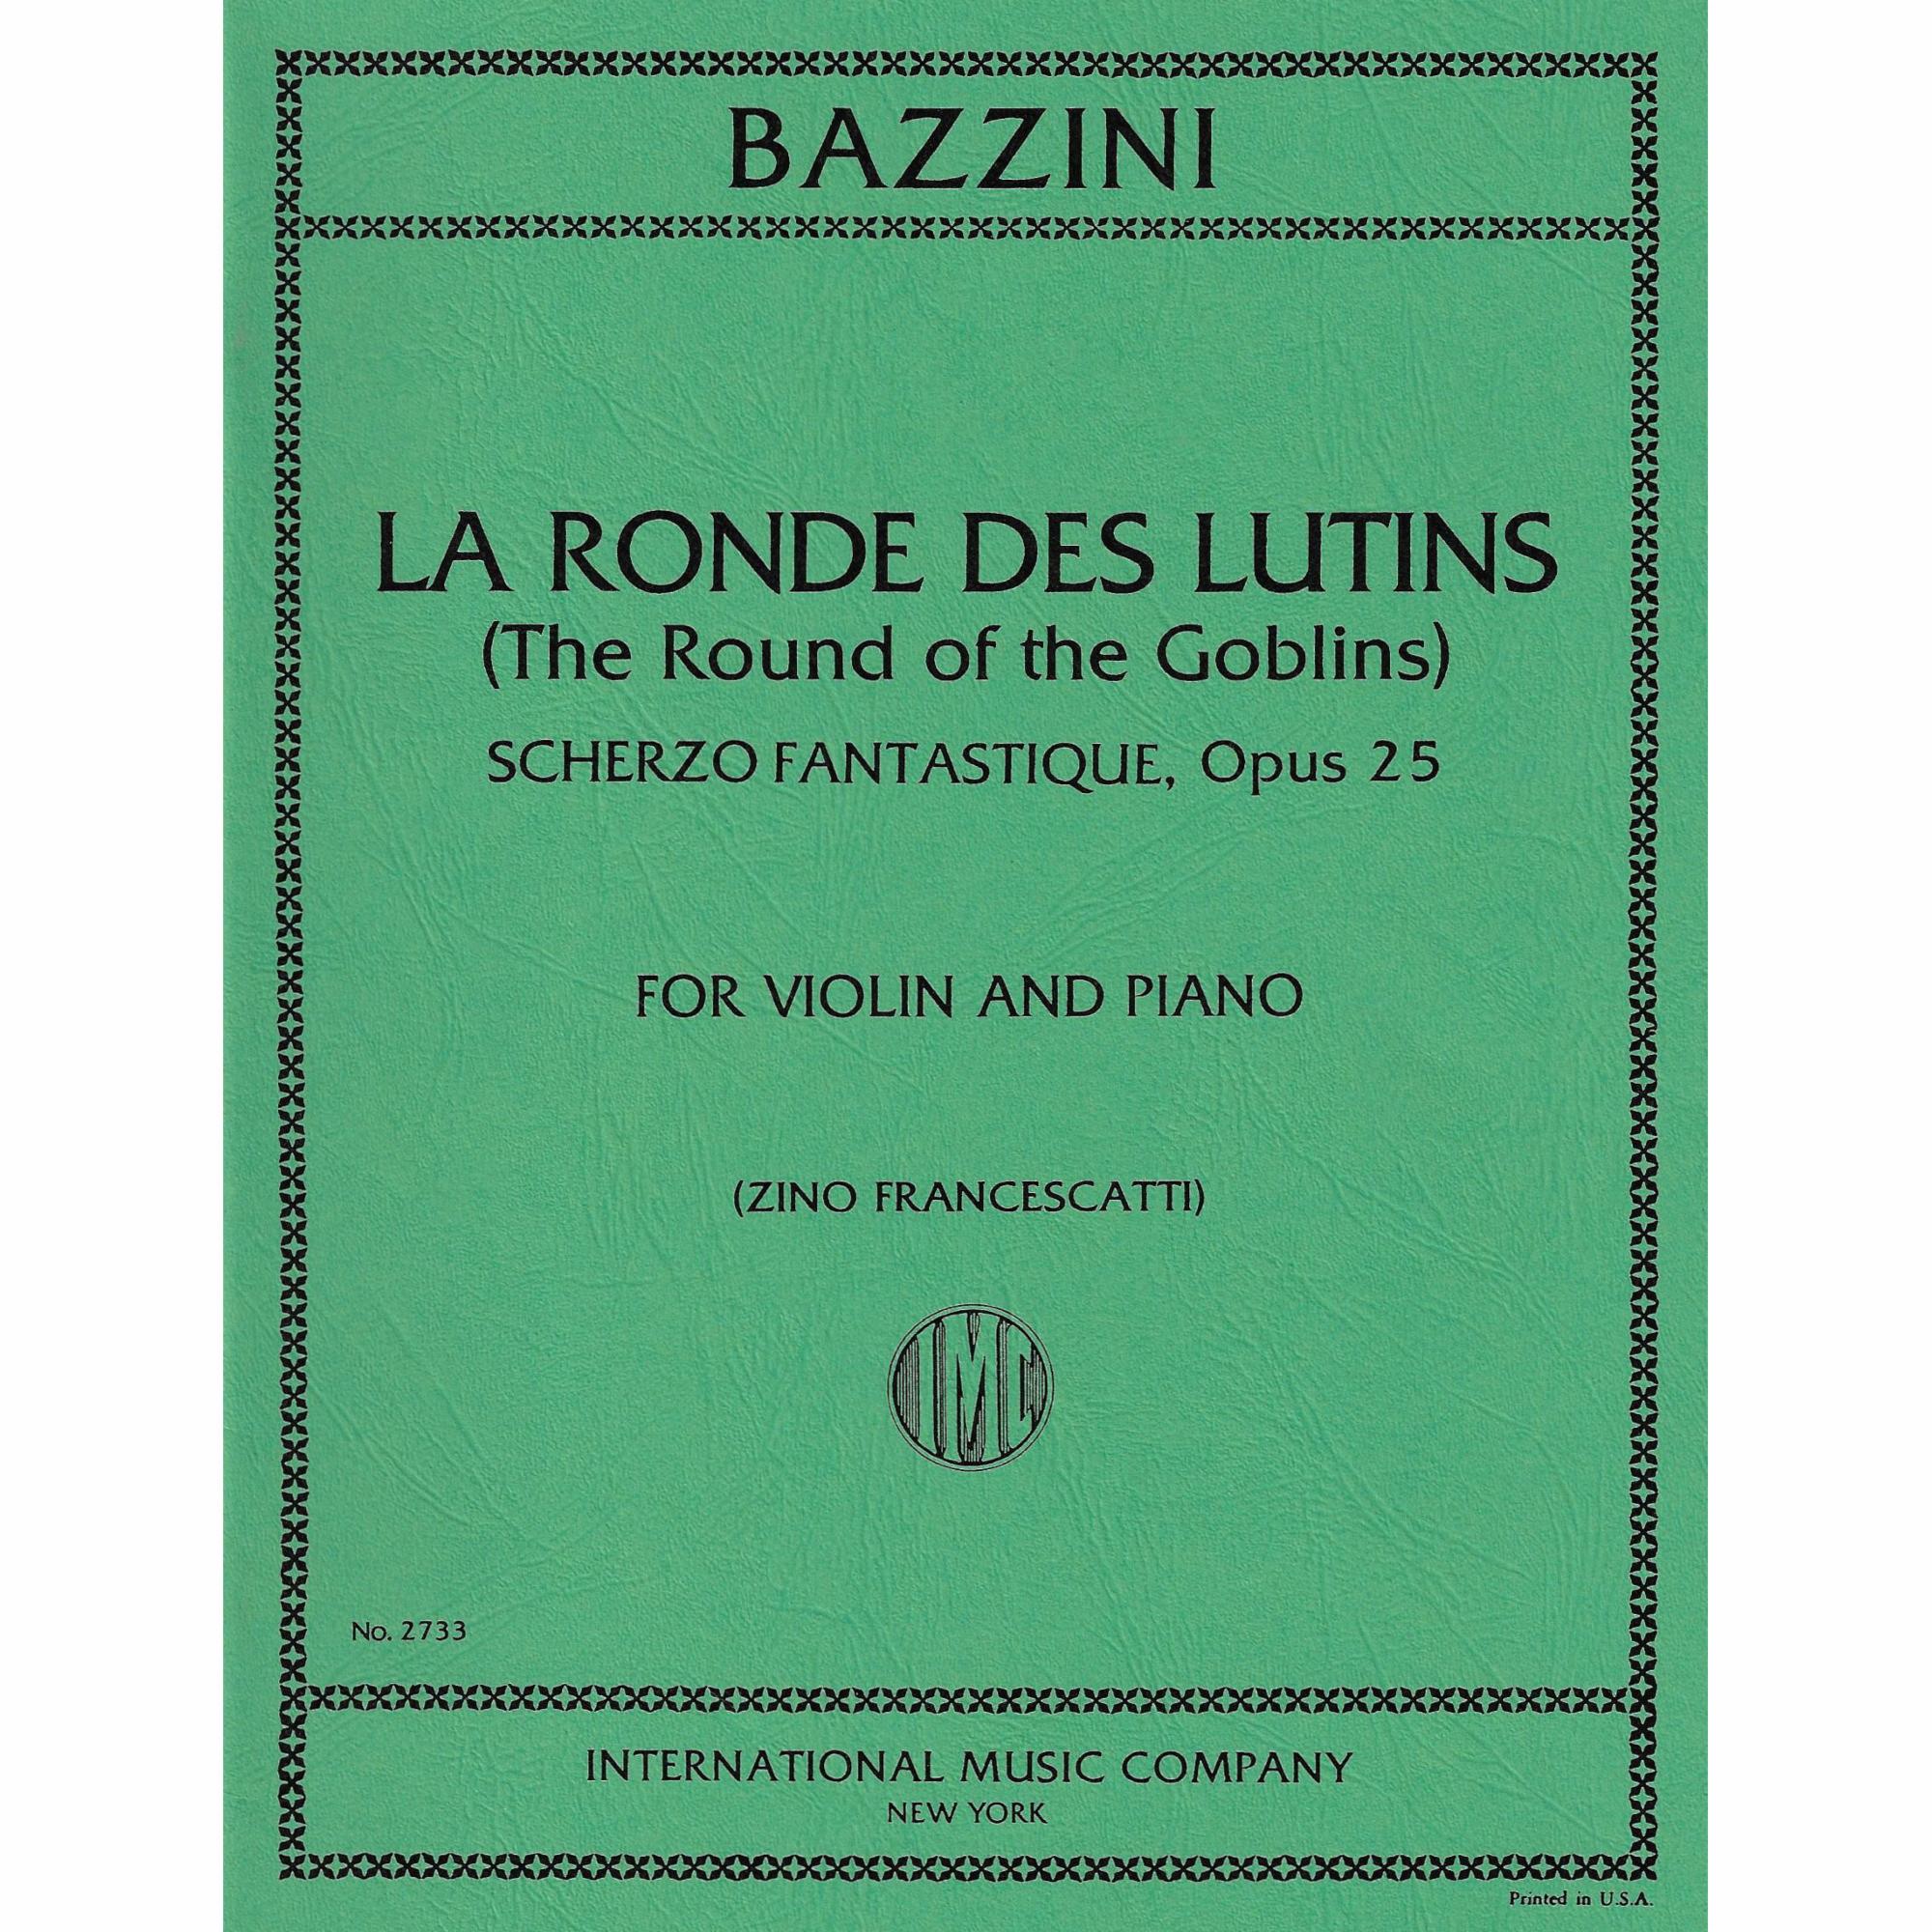 Bazzini -- La Ronde des Lutins, Op. 25 for Violin and Piano